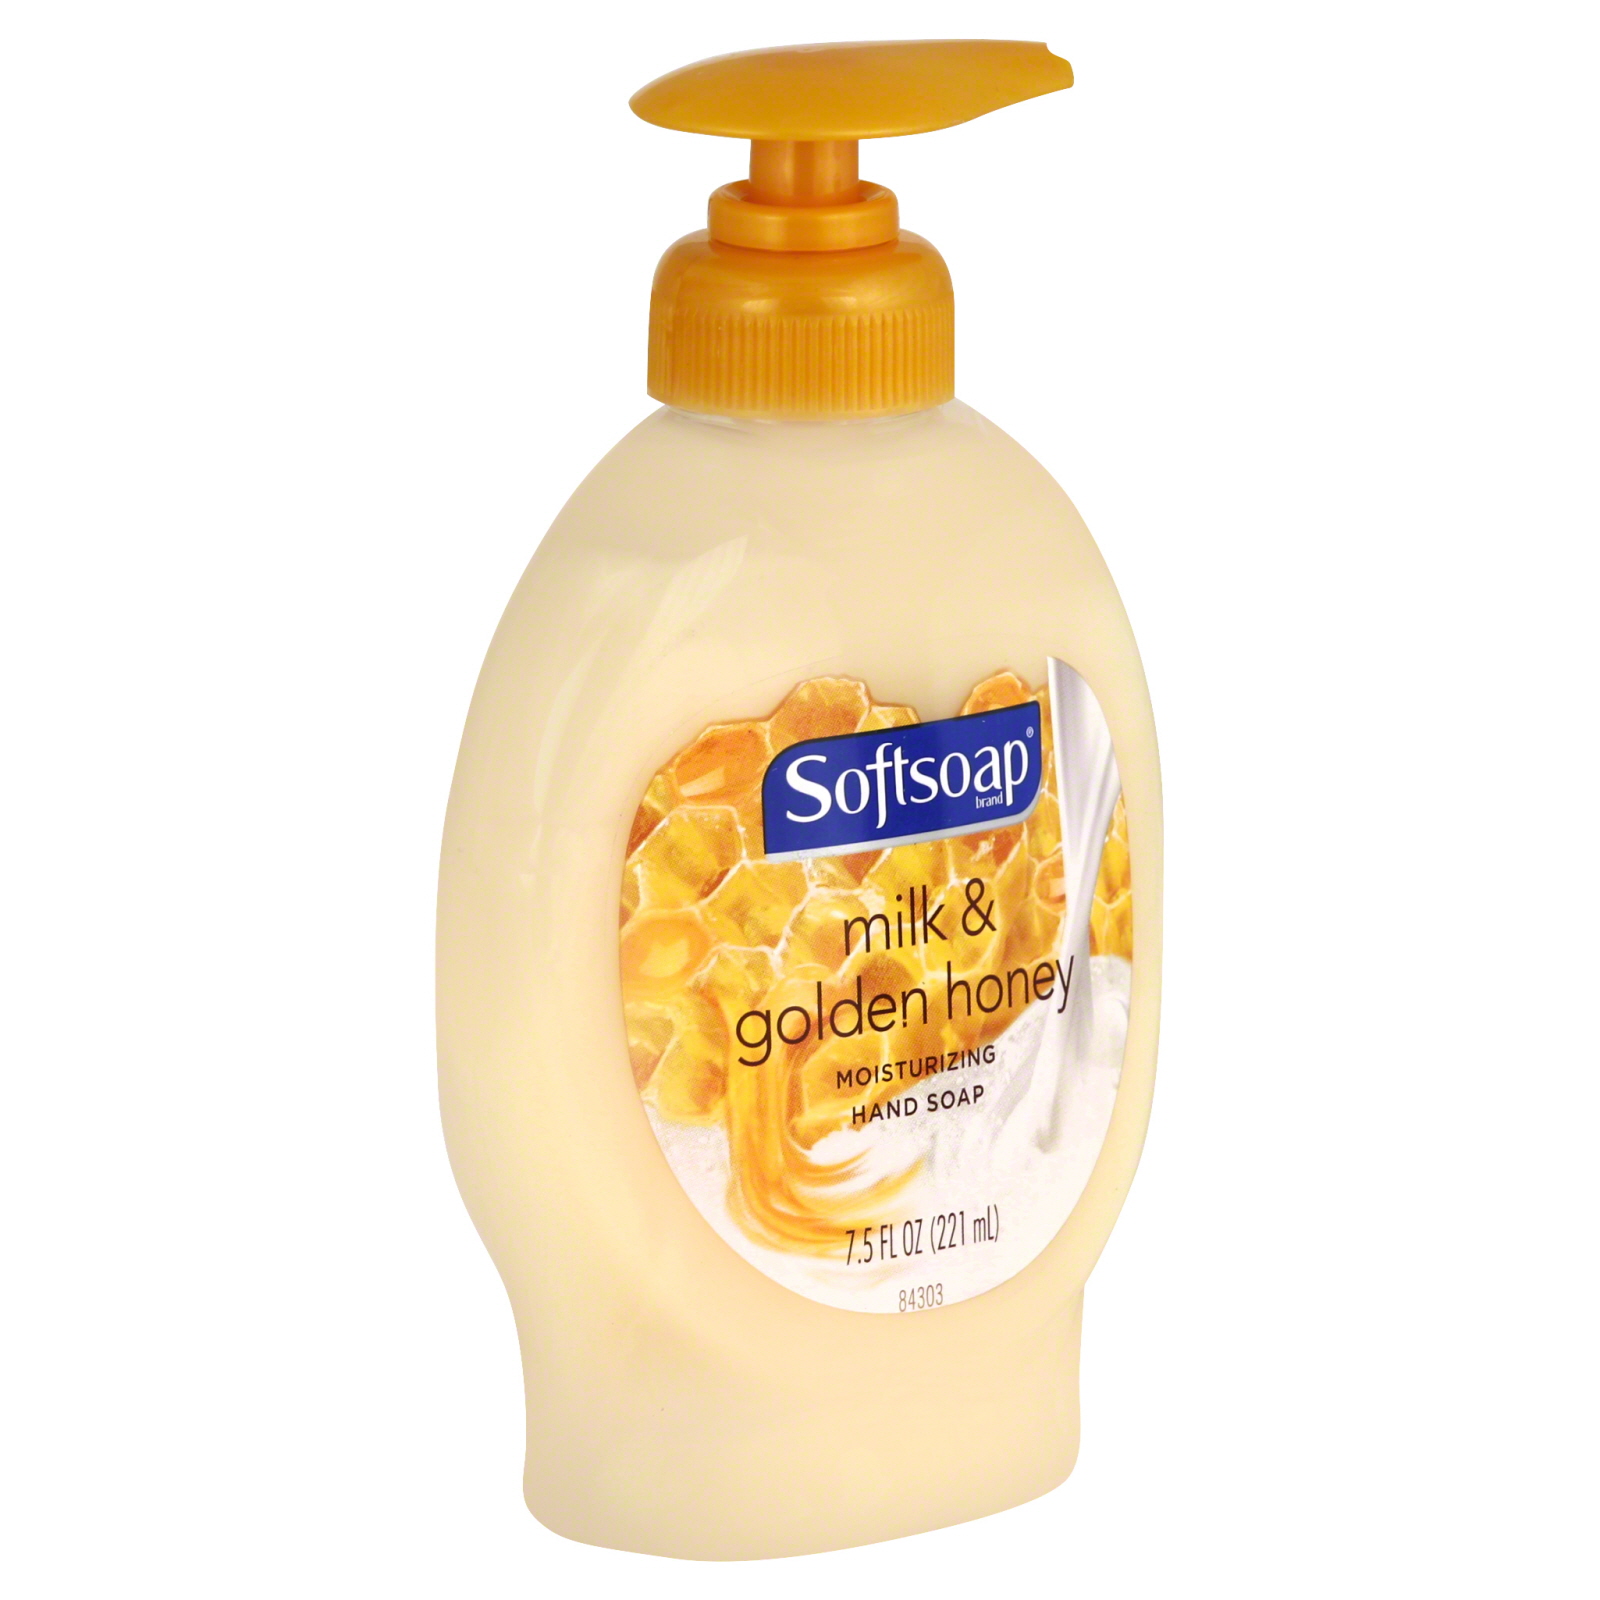 Softsoap Elements Moisturizing Hand Soap, Milk Protein & Honey, 7.5 fl oz (221 ml)